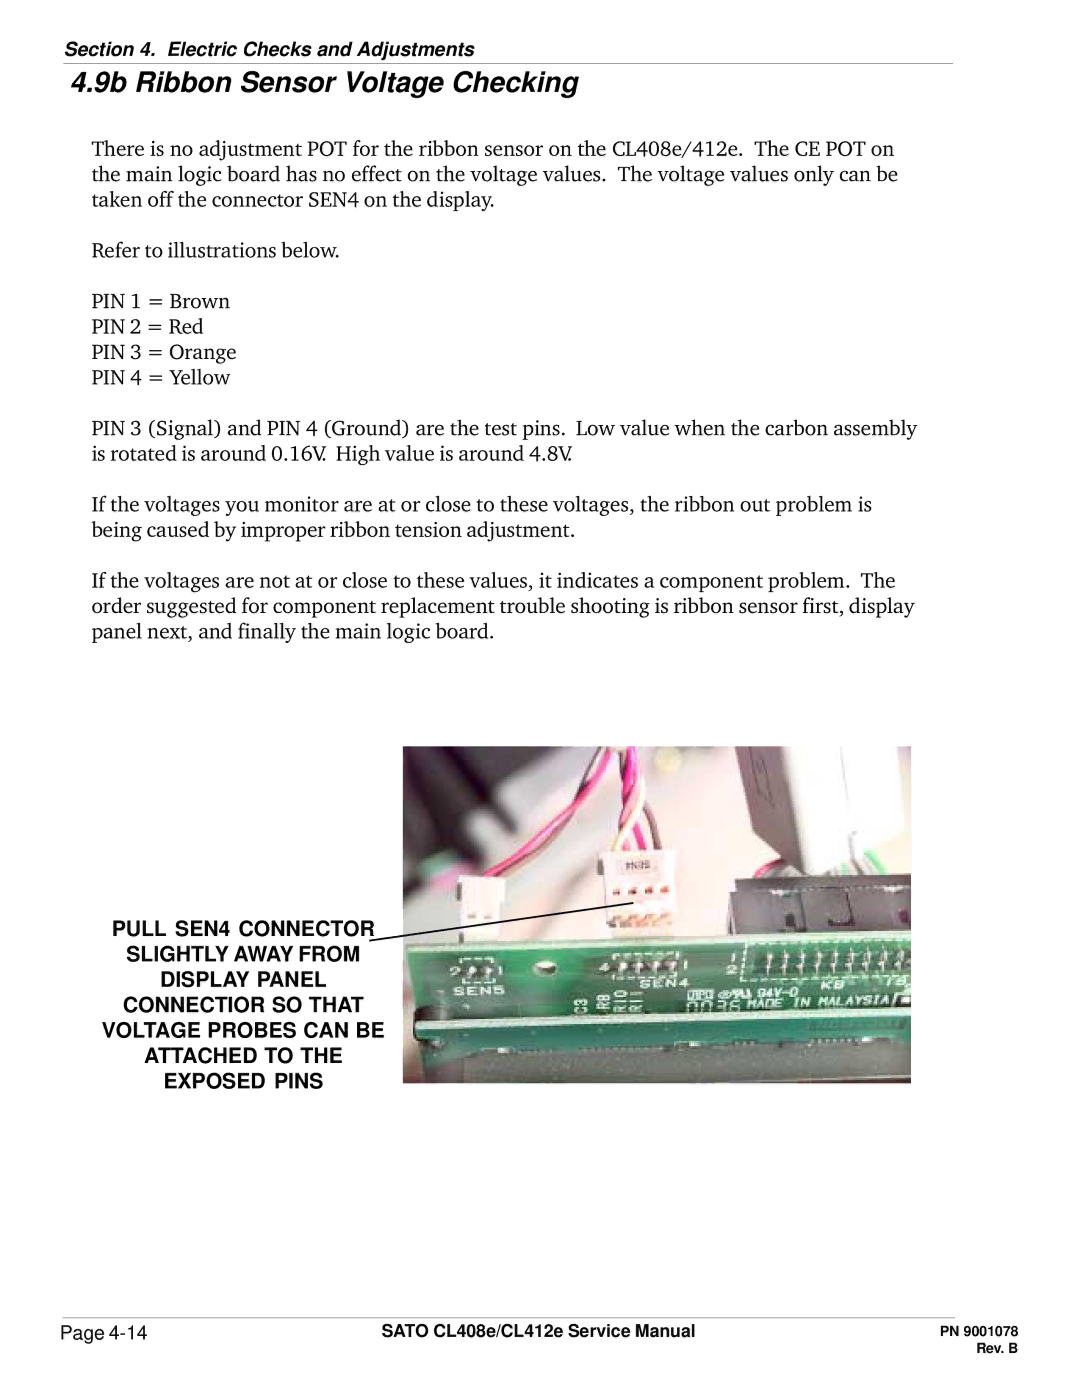 SATO CL412E service manual 9b Ribbon Sensor Voltage Checking 